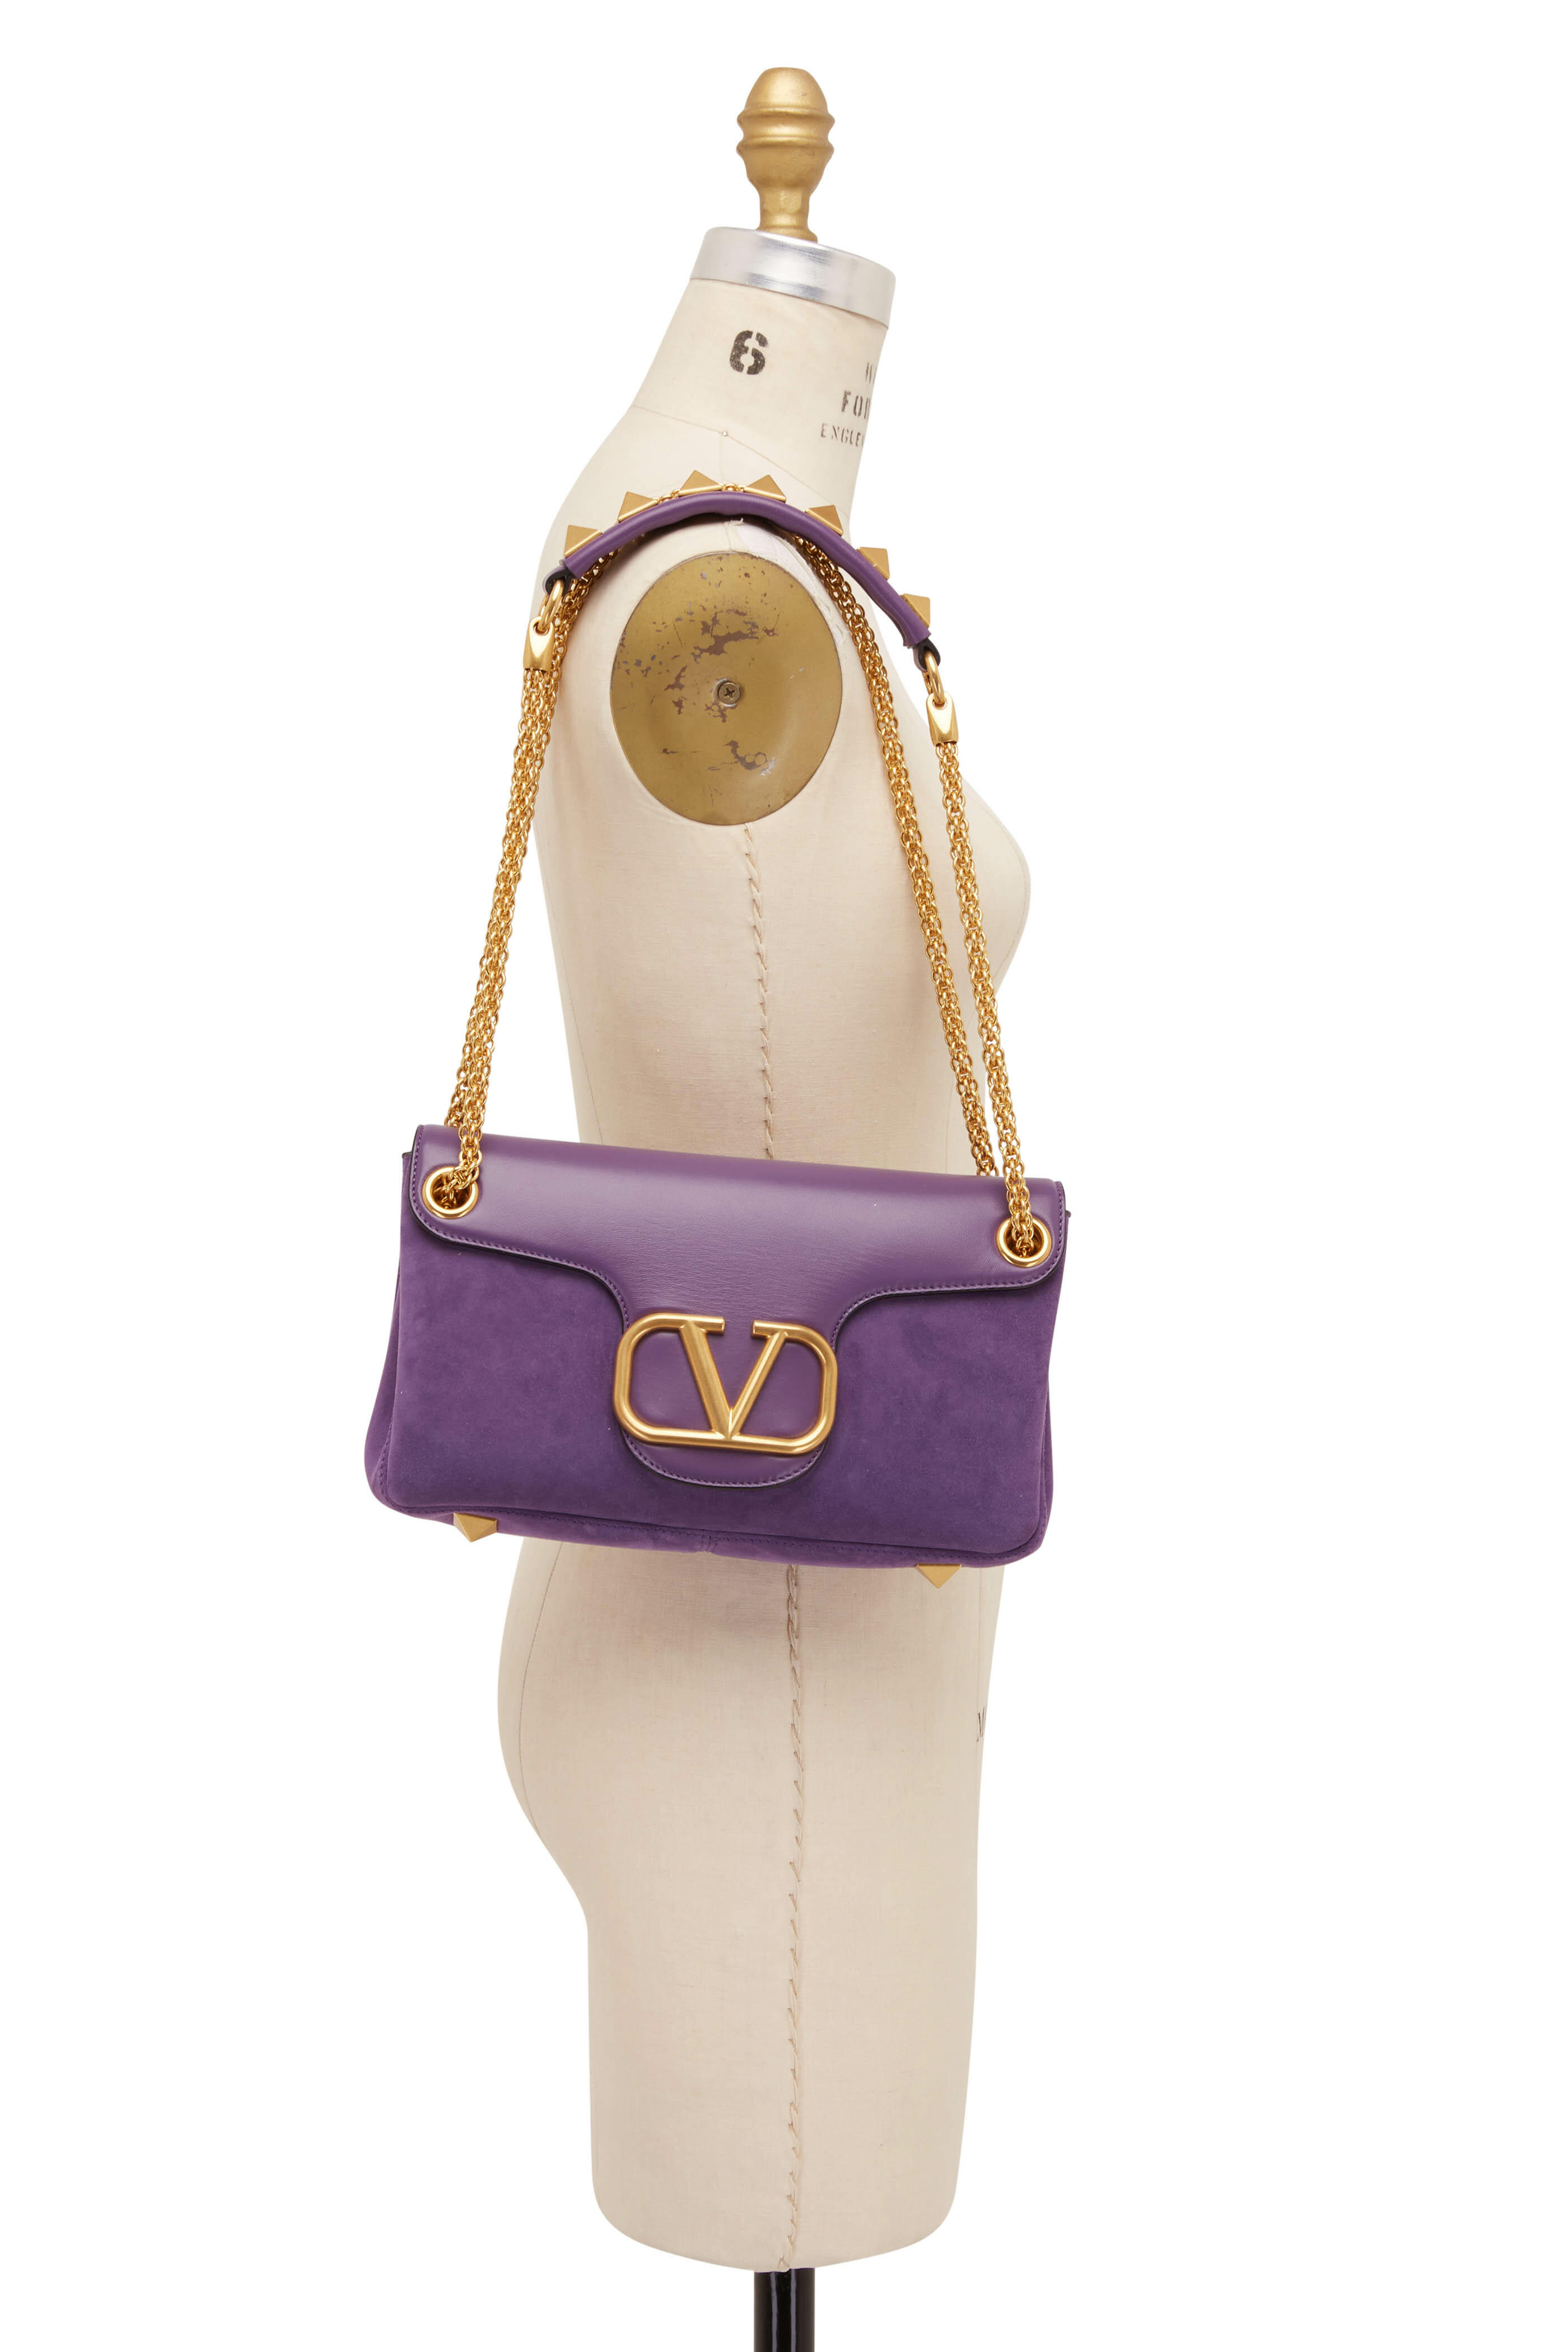 V Logo Leather Shoulder Bag in Purple - Valentino Garavani